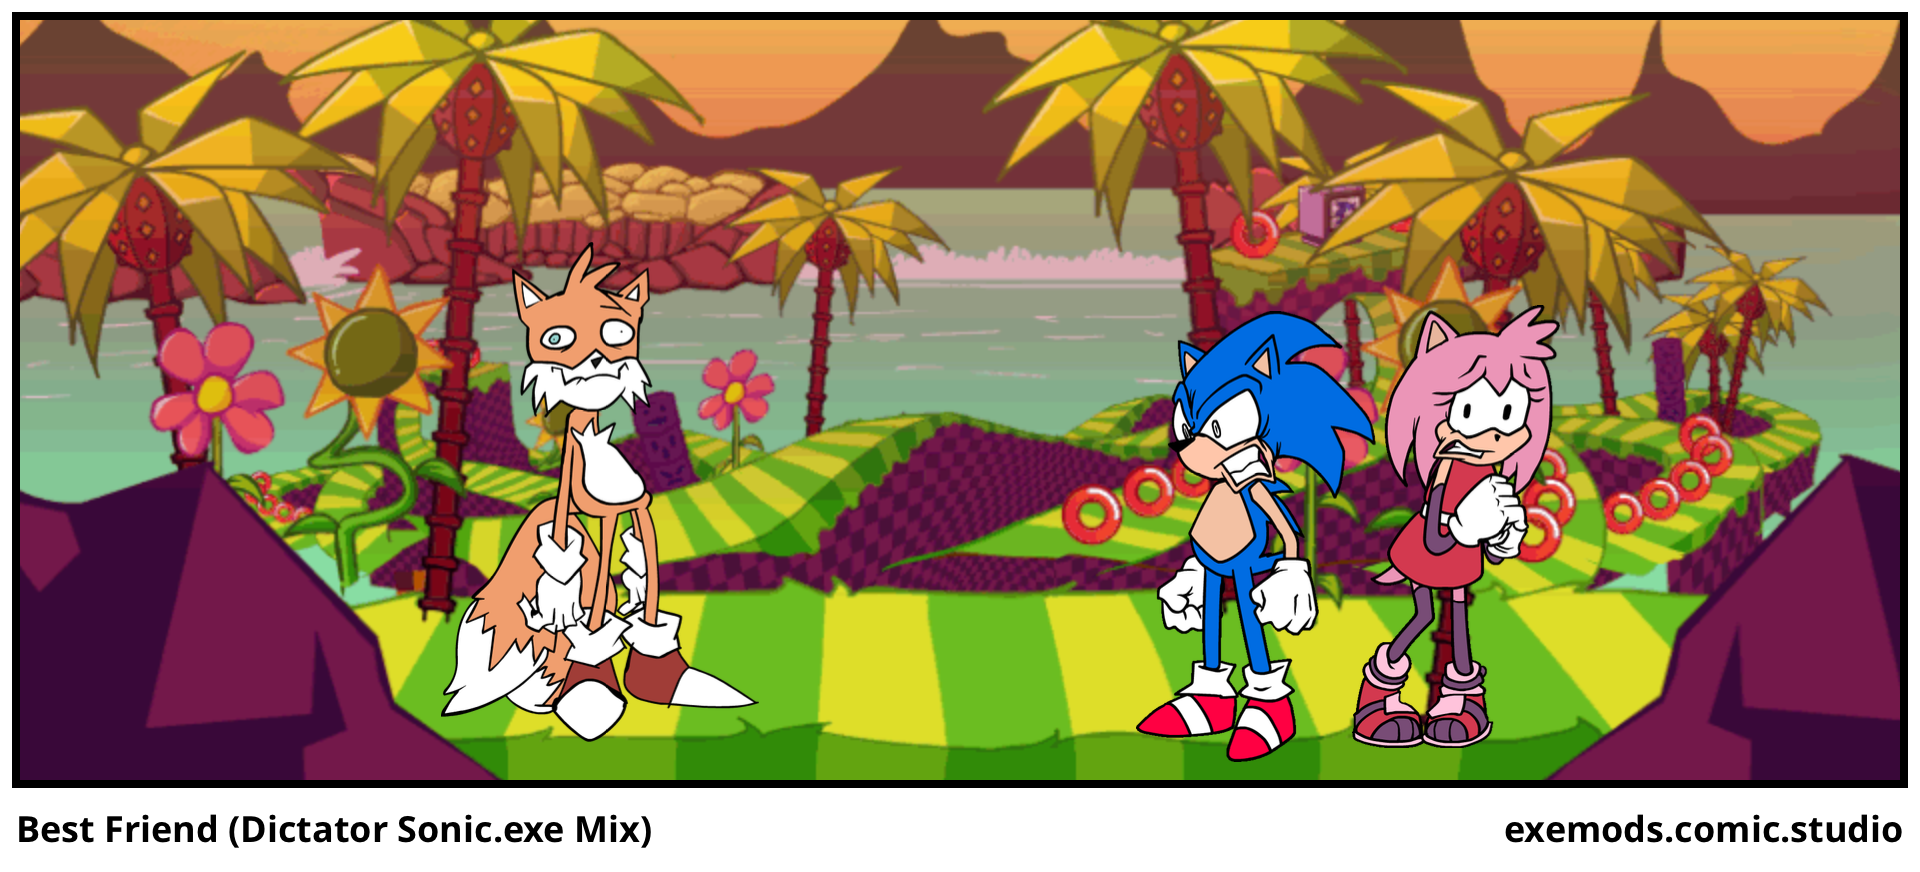 Best Friend (Dictator Sonic.exe Mix) 